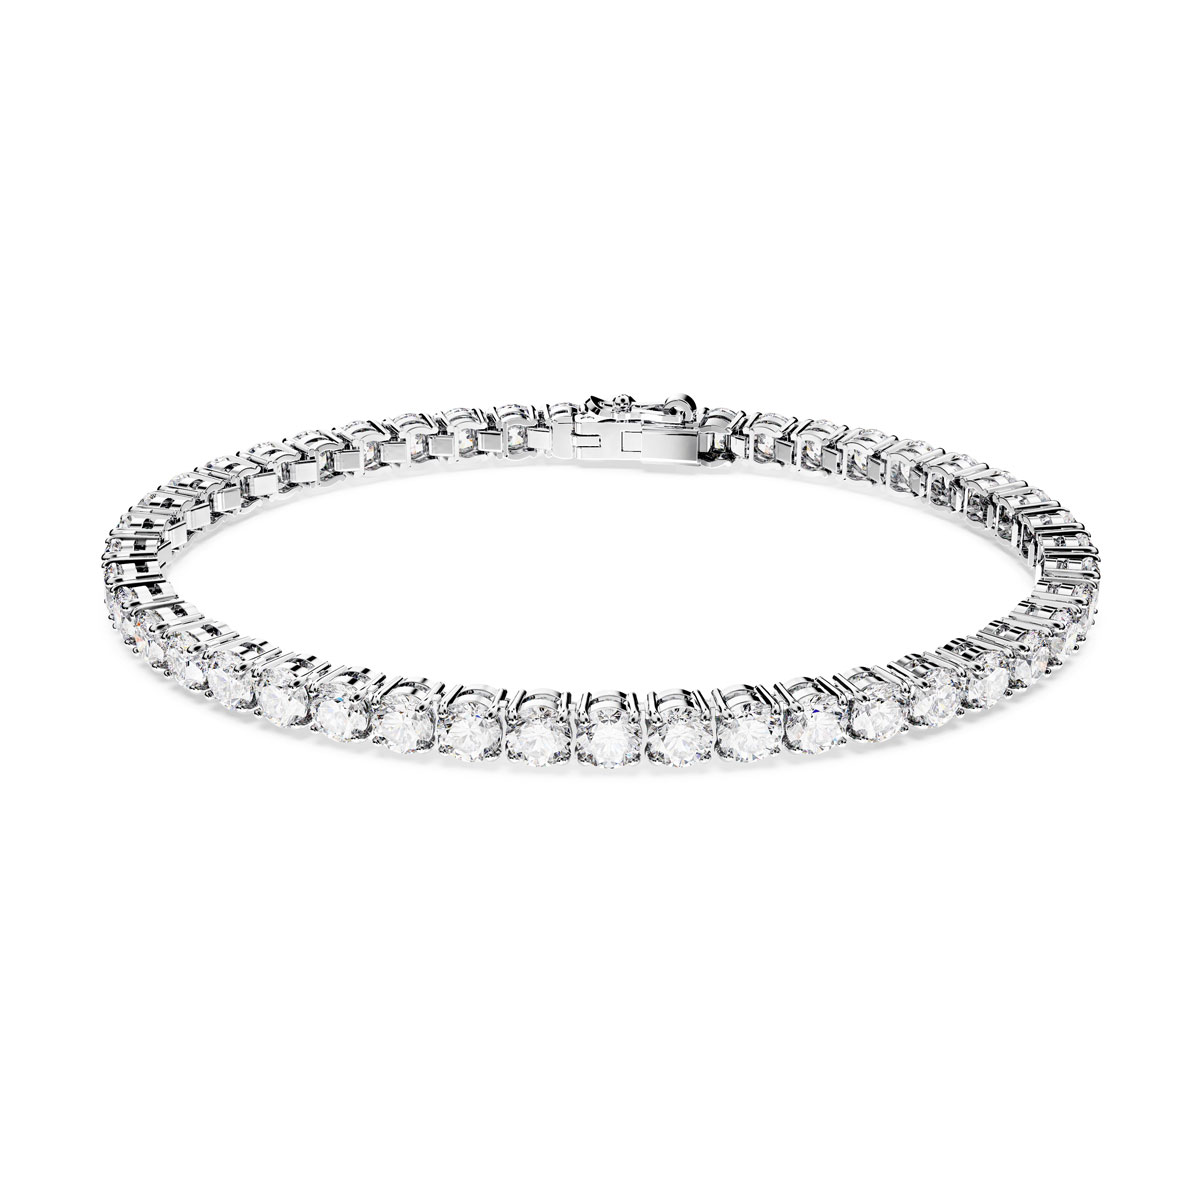 Swarovski Jewelry White Crystal and Rhodium Matrix Tennis Bracelet, Small